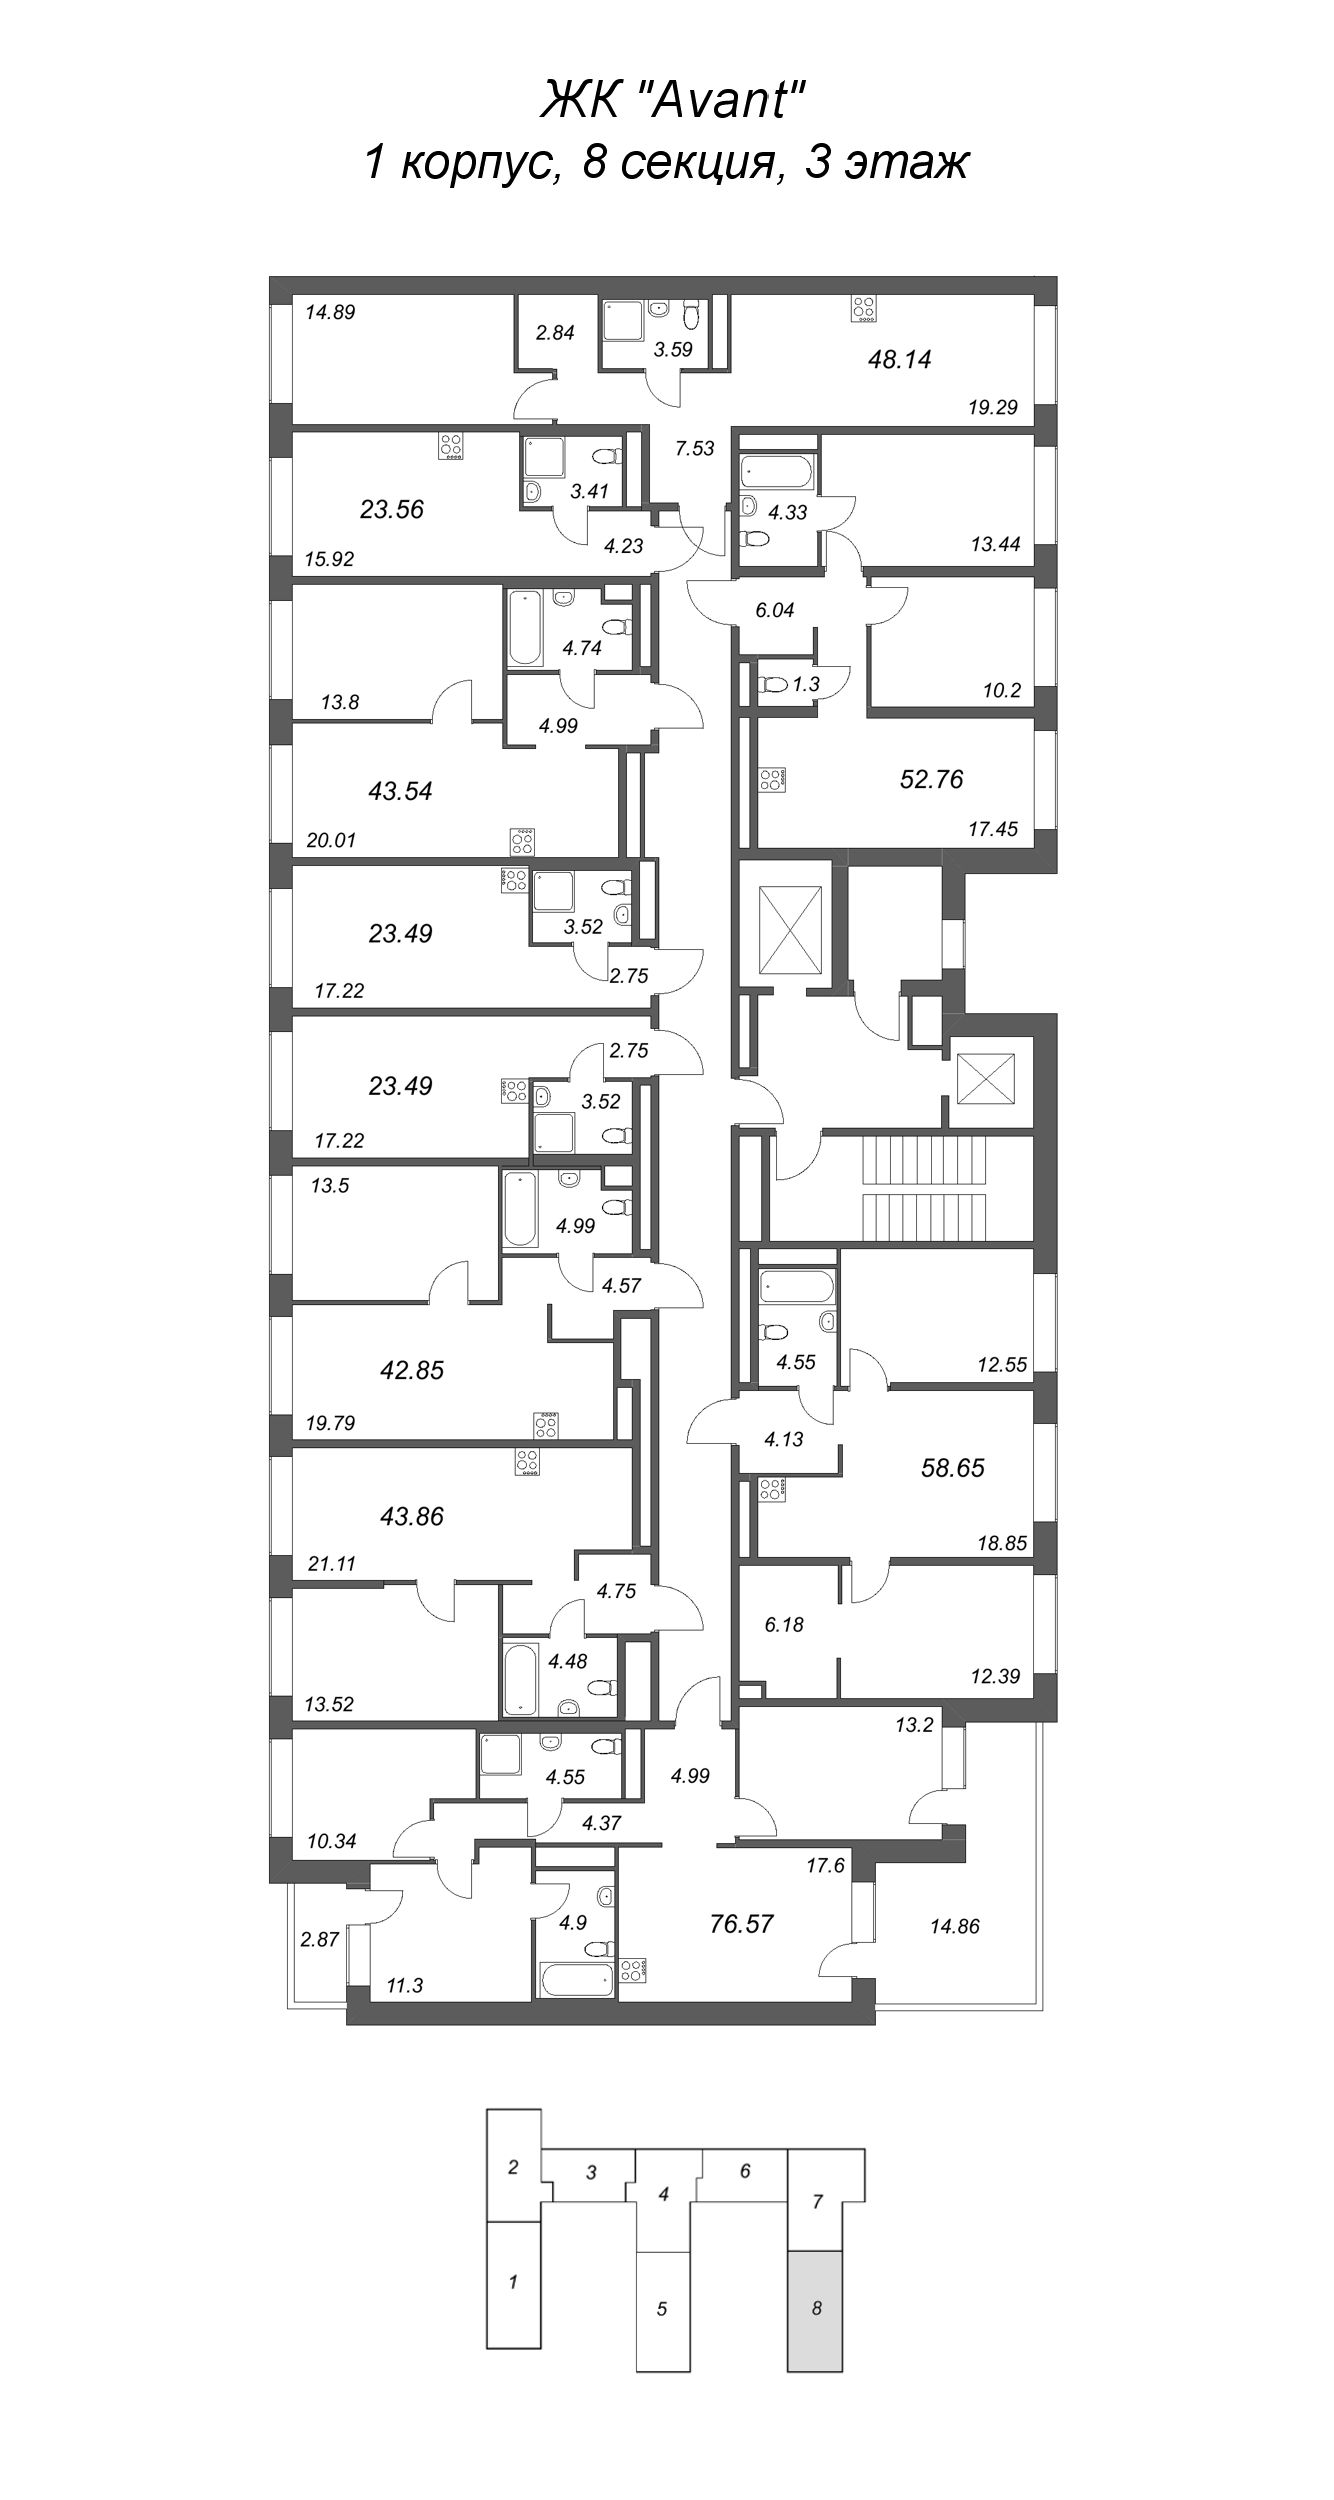 3-комнатная (Евро) квартира, 58.65 м² - планировка этажа